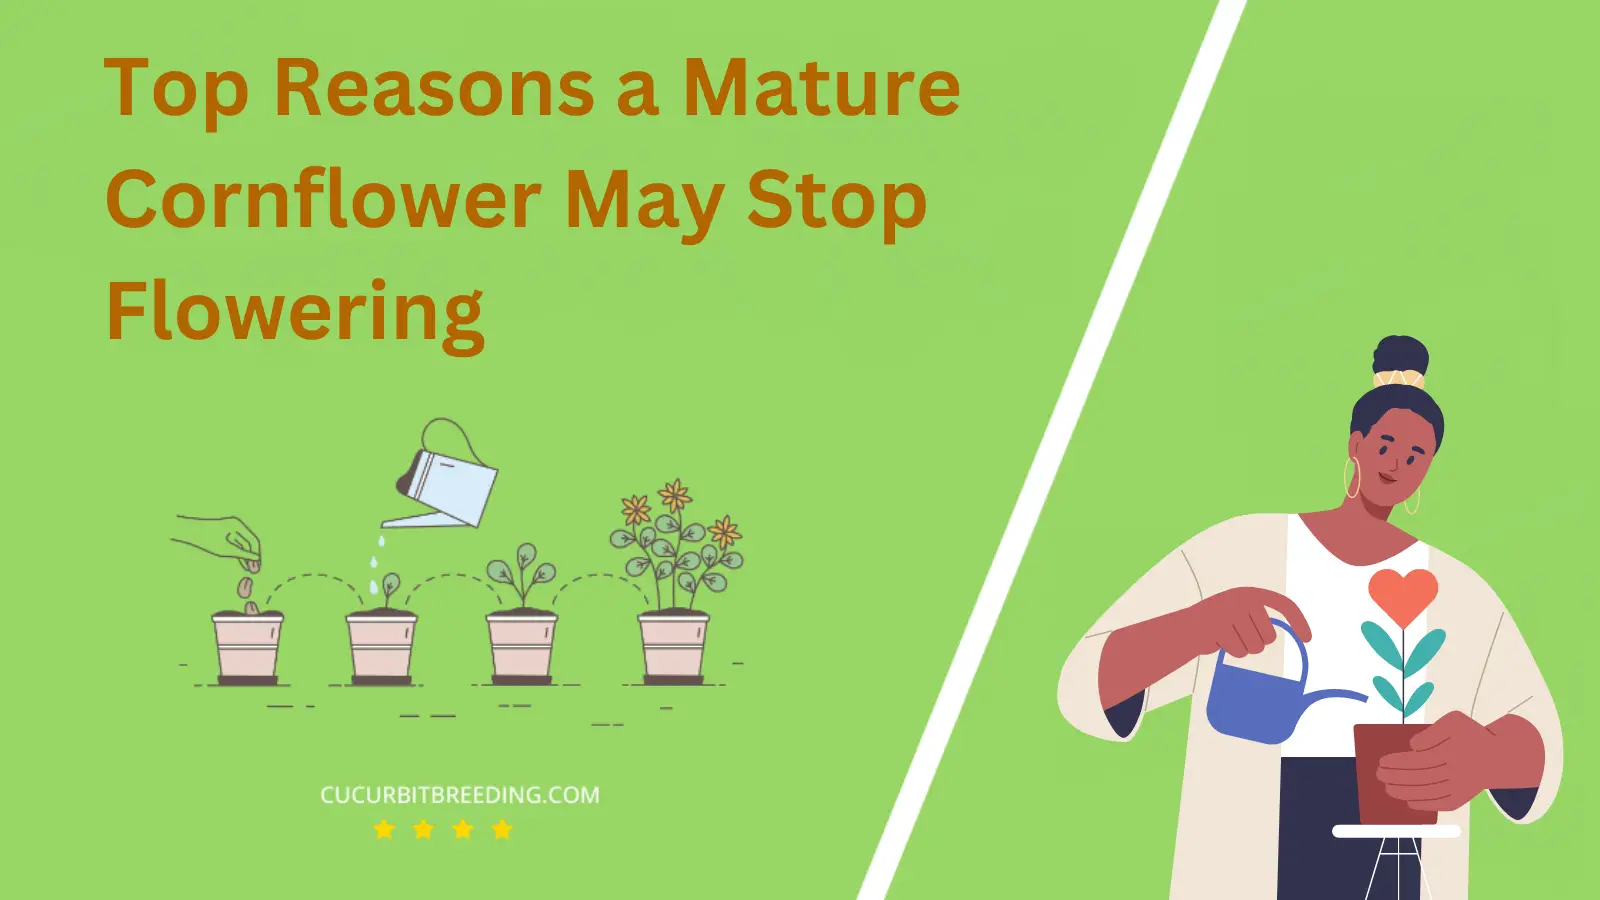 Top Reasons a Mature Cornflower May Stop Flowering